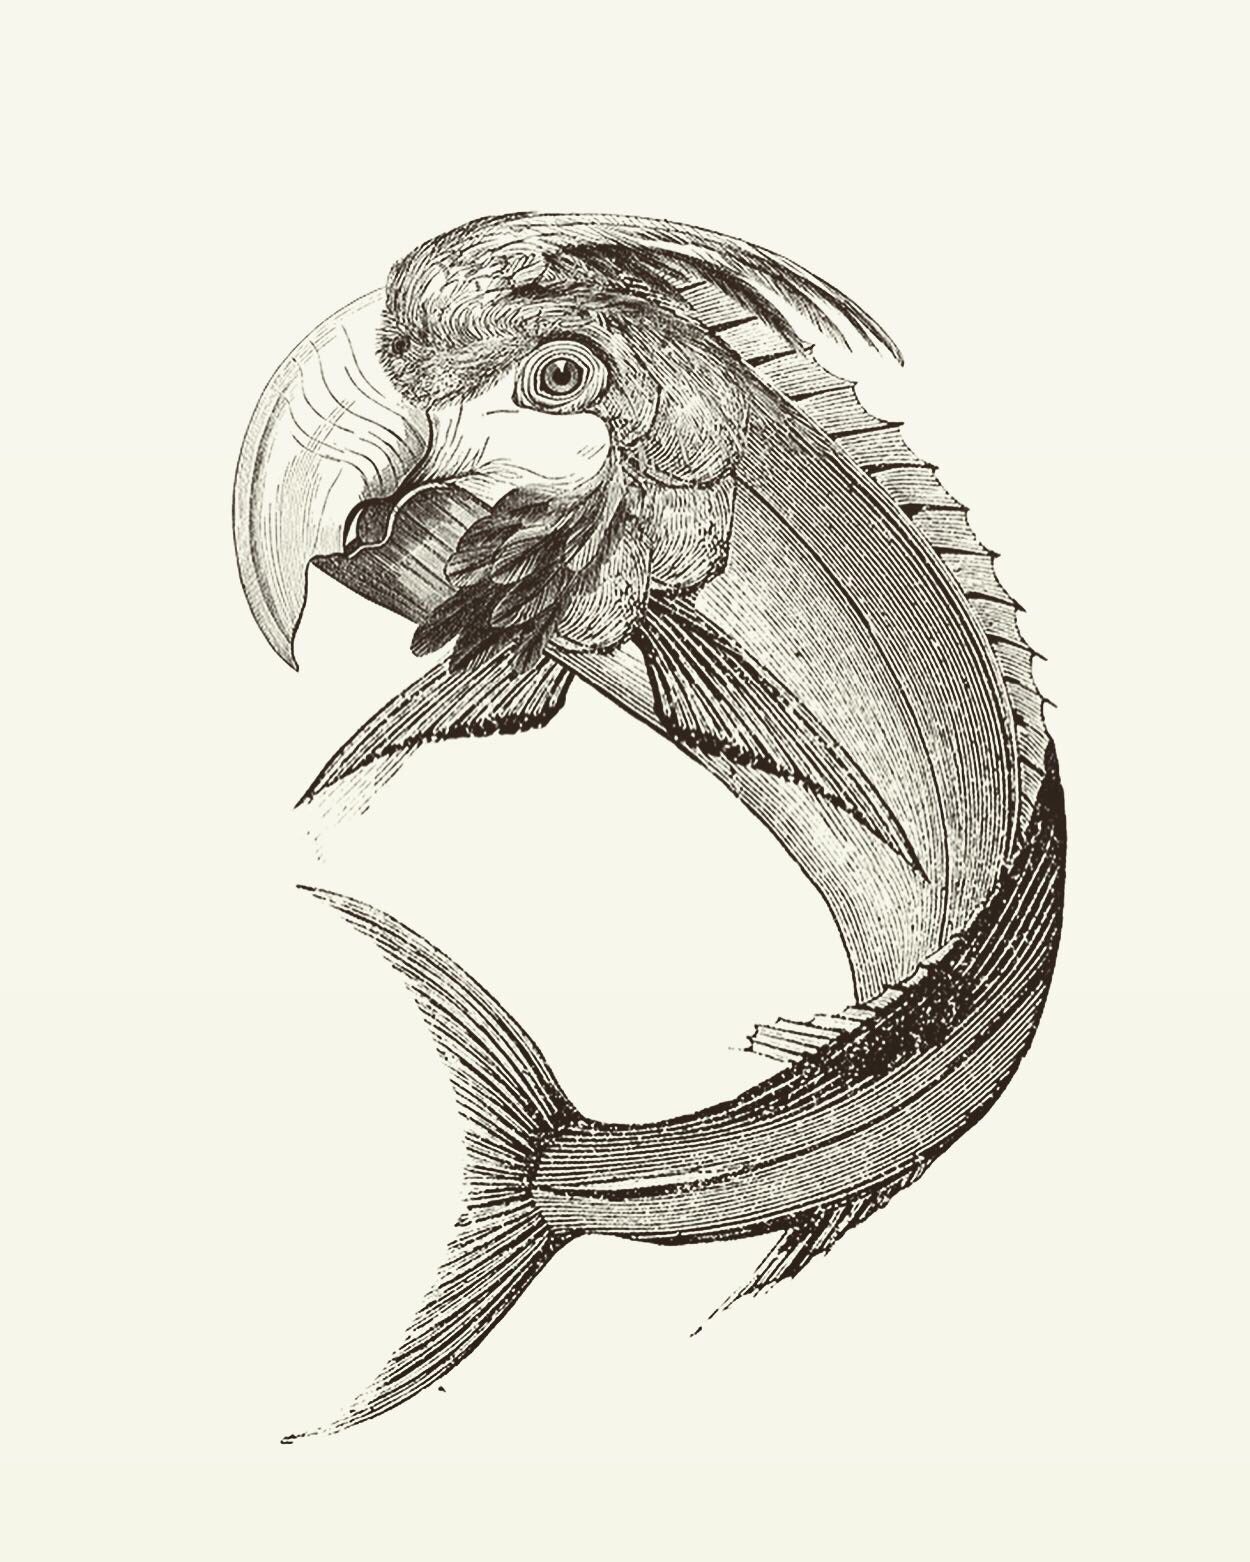 Animal Illustrations wood engraving, parrot fish